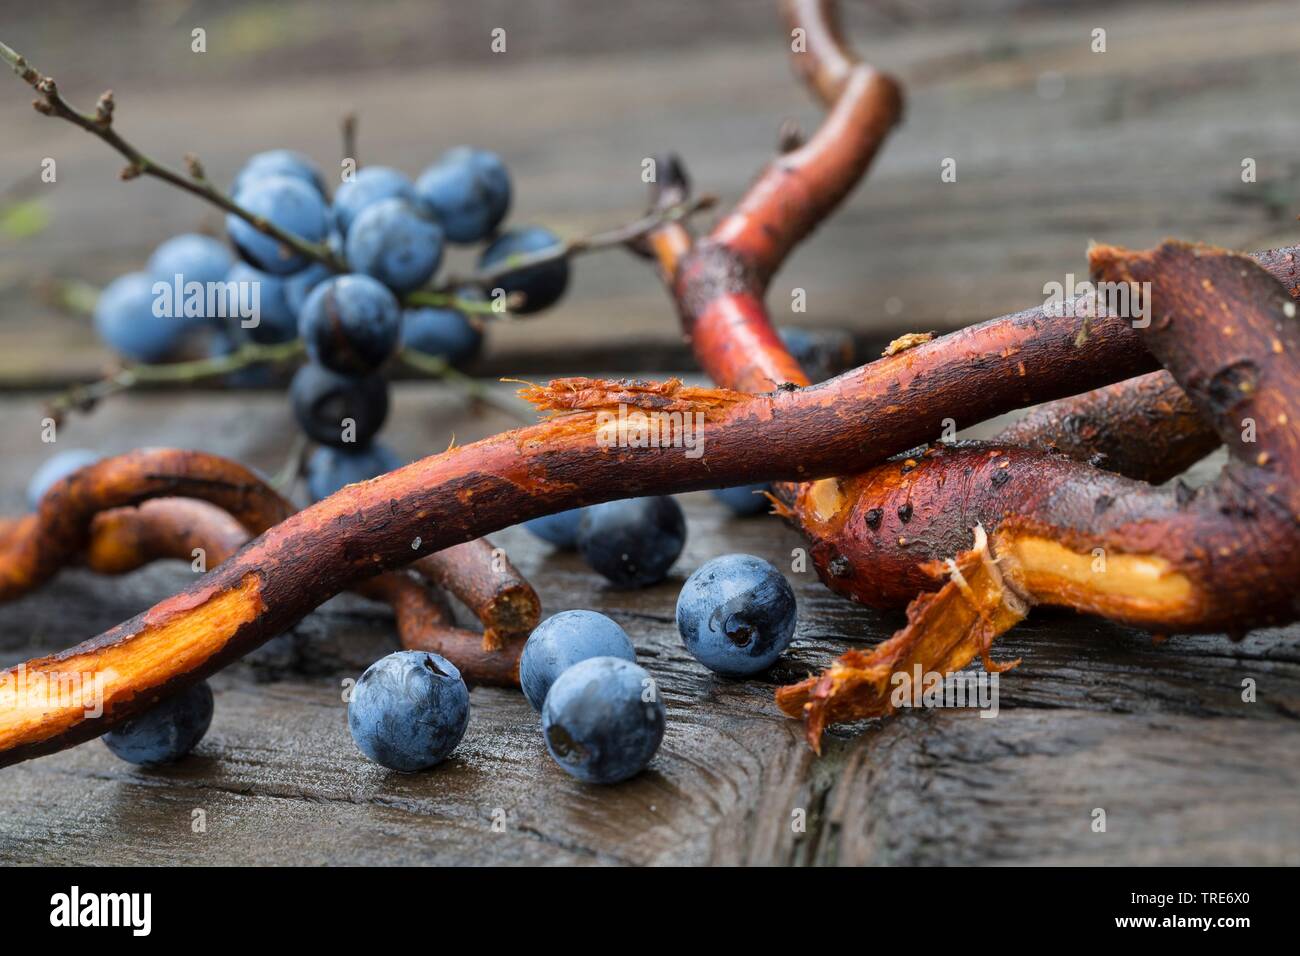 Prunellier, prunelle (Prunus spinosa), racines et fruits recueillis prunelle, Allemagne Banque D'Images